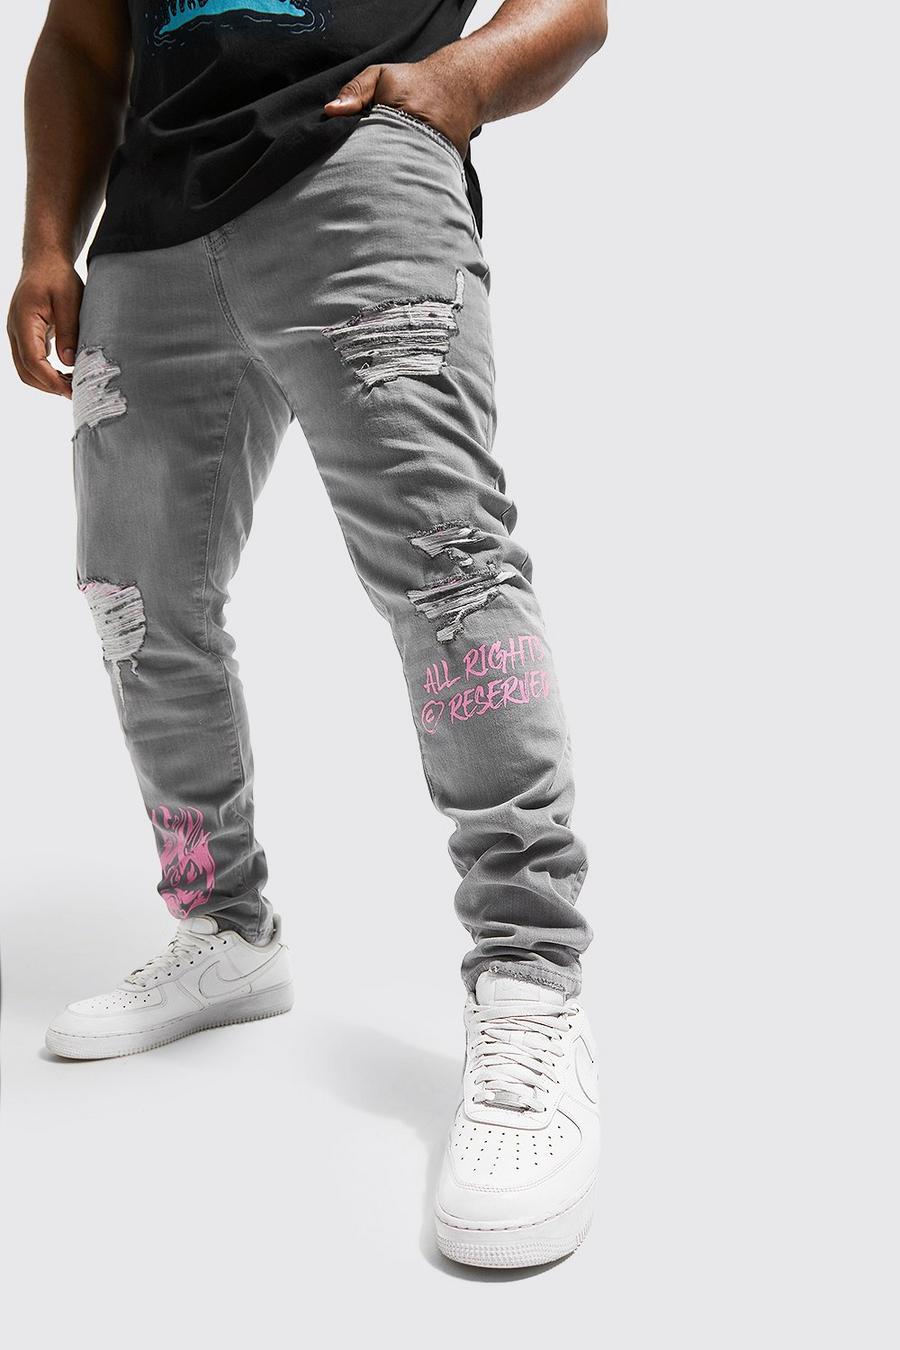 Light grey grigio סקיני ג'ינס עם הדפס בנדנה-גרפיטי וקרעים, מידות גדולות